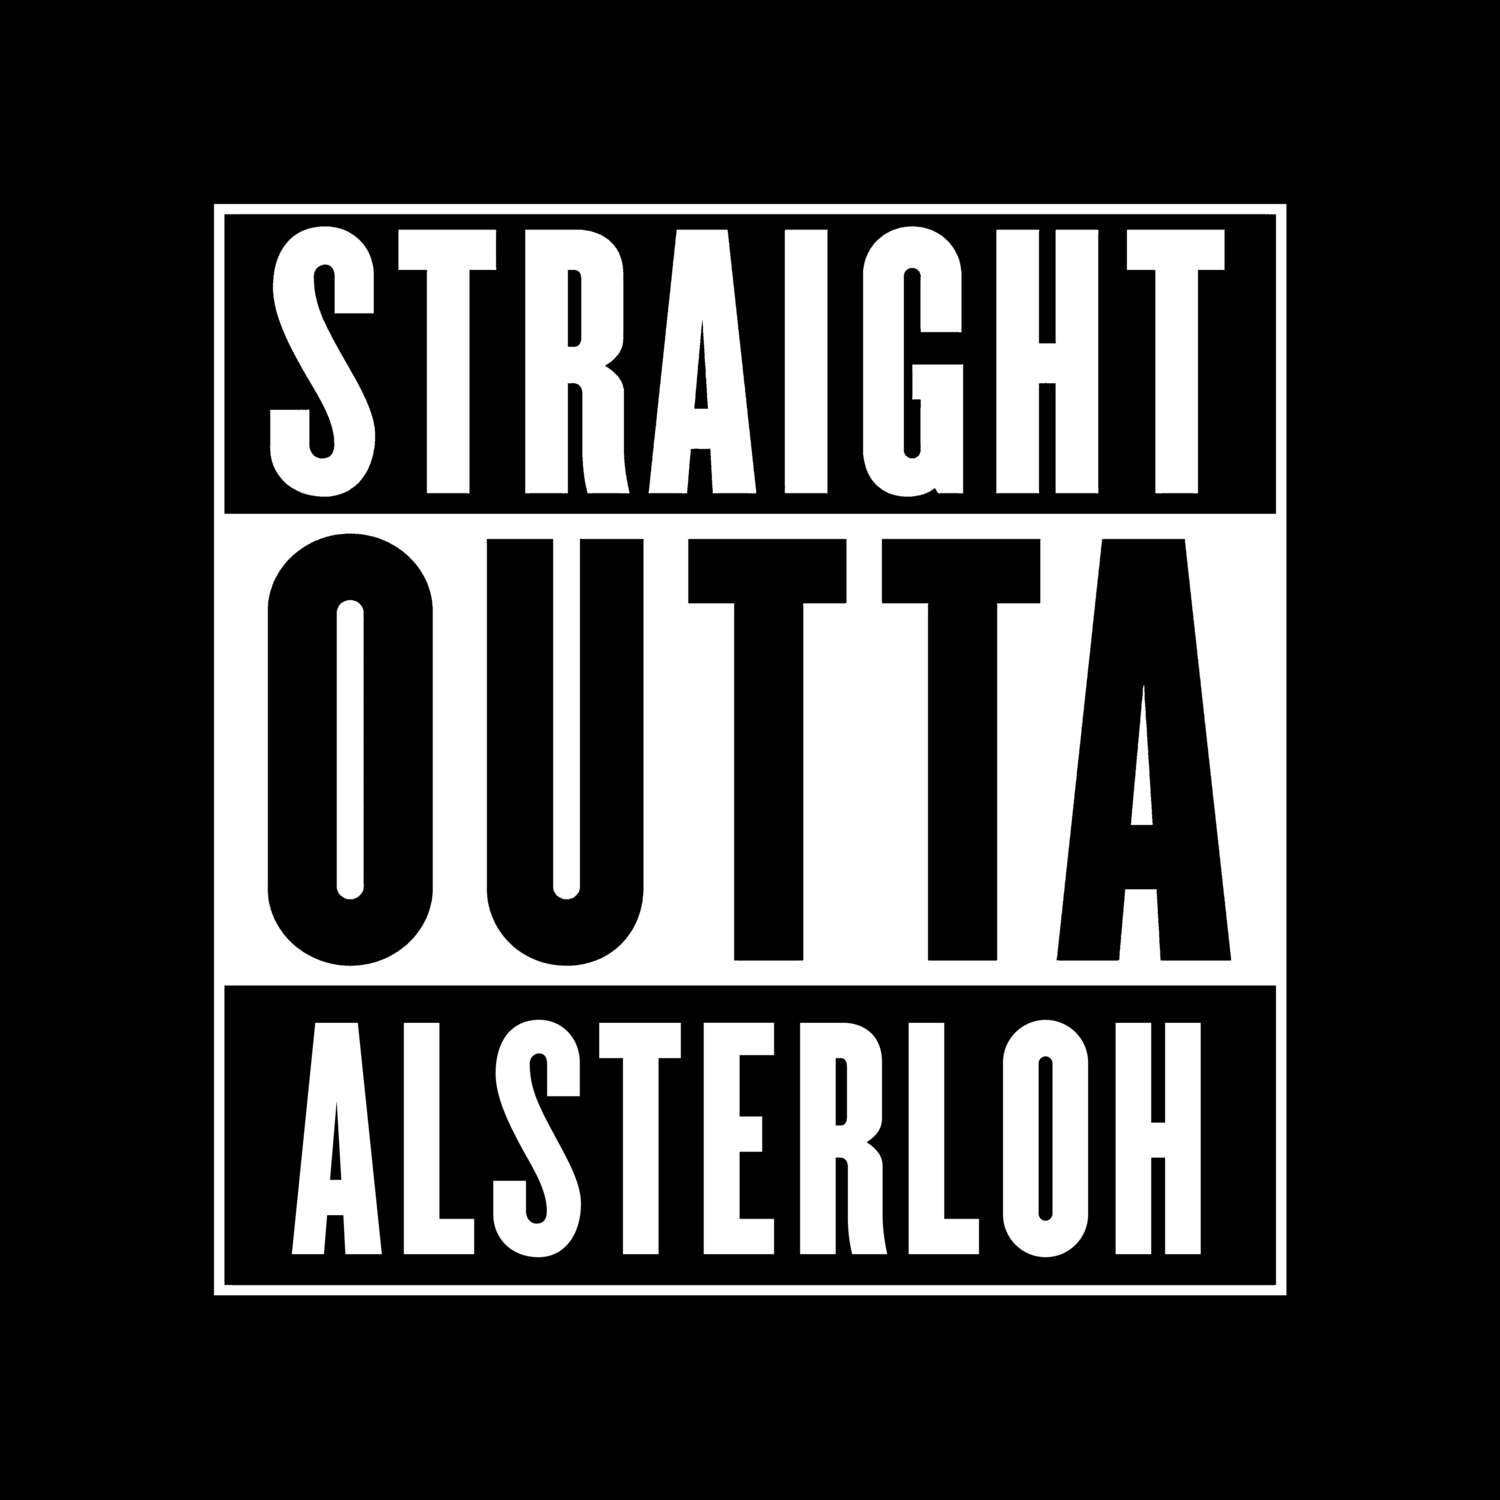 Alsterloh T-Shirt »Straight Outta«